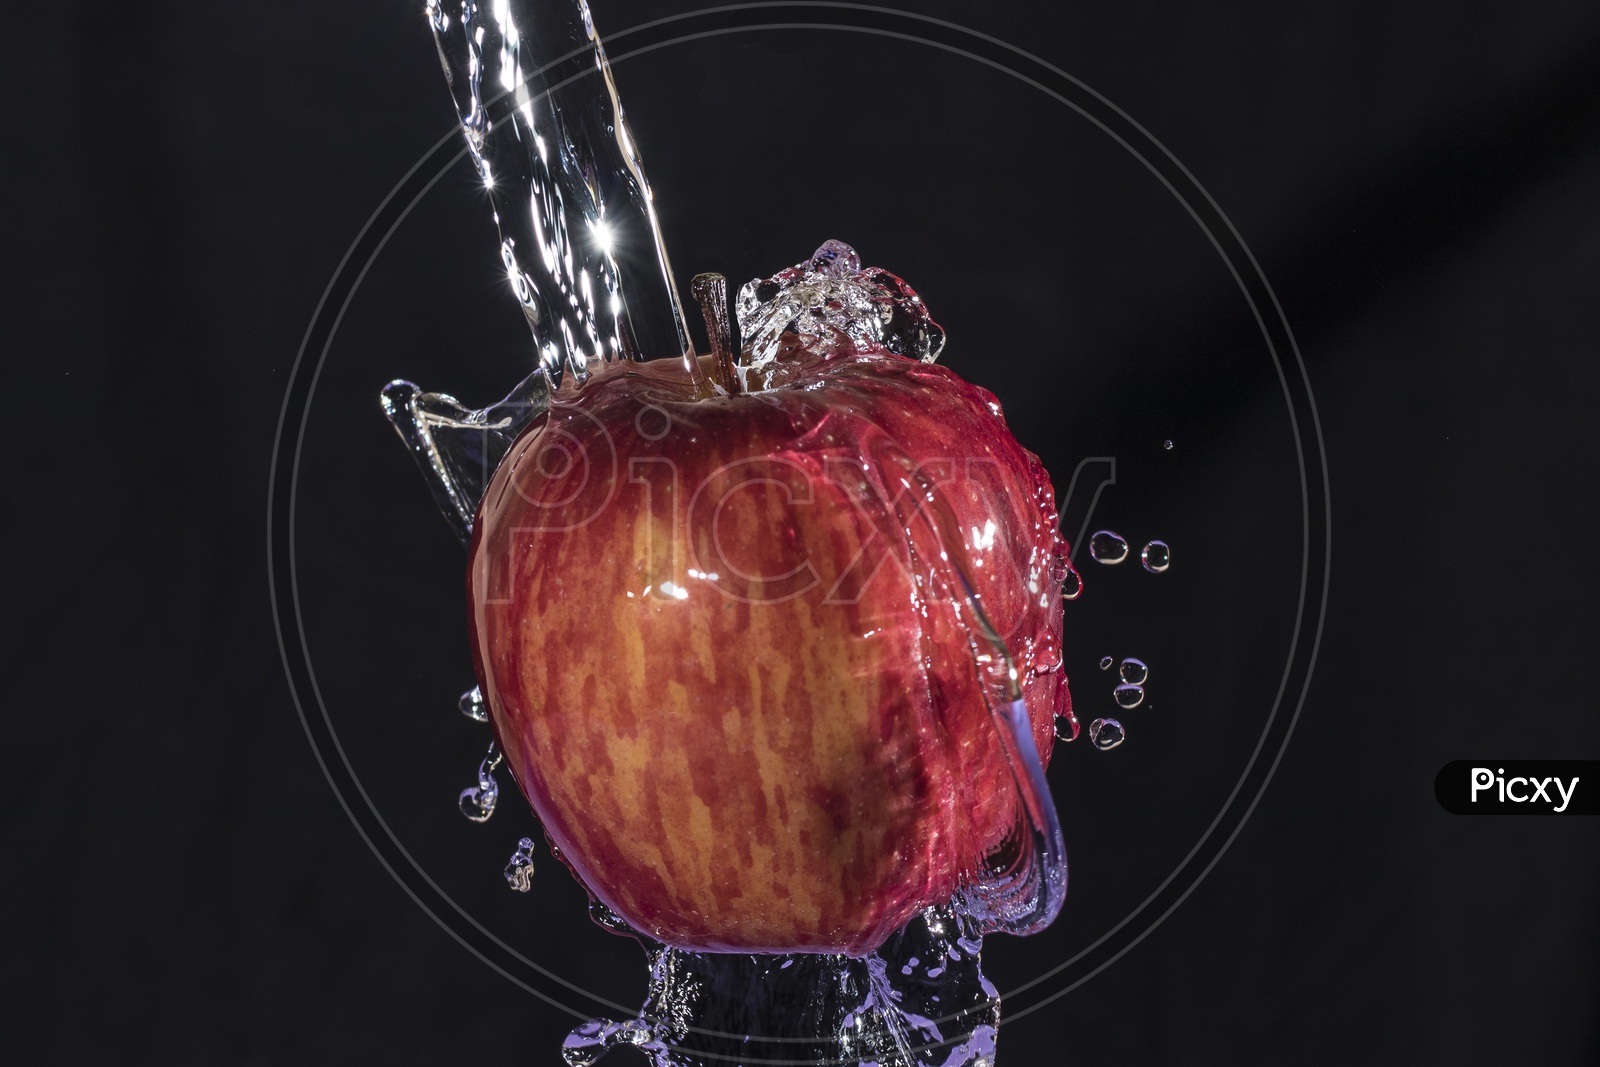 apple with water splash